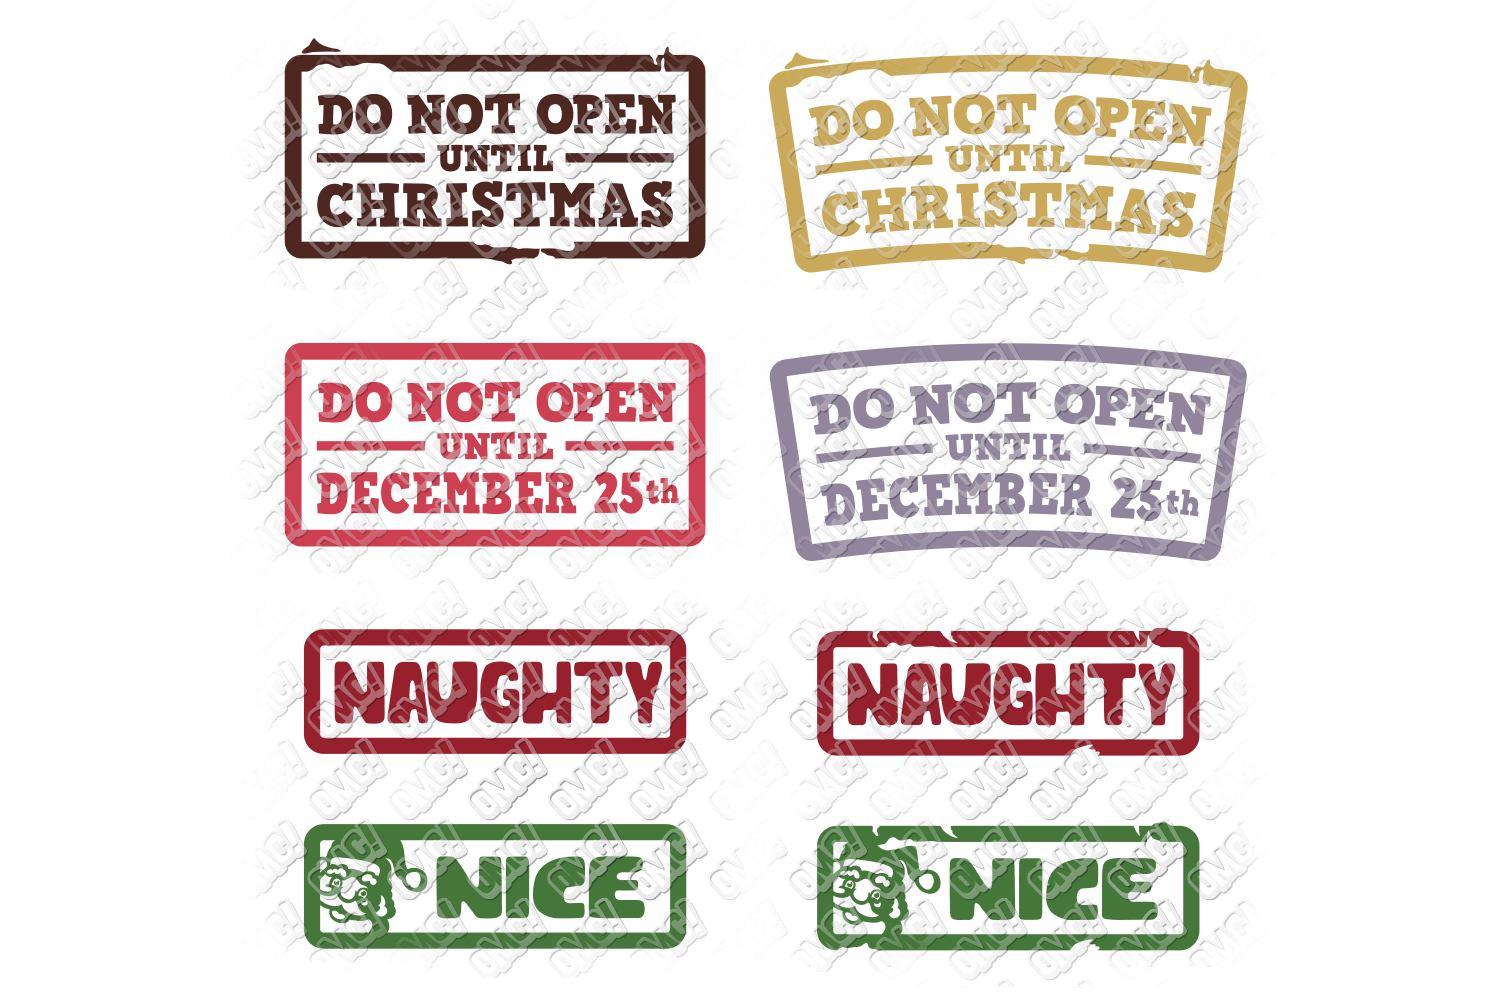 Download Christmas Stamps SVG Postage Seal in SVG, DXF, PNG, EPS, JPG